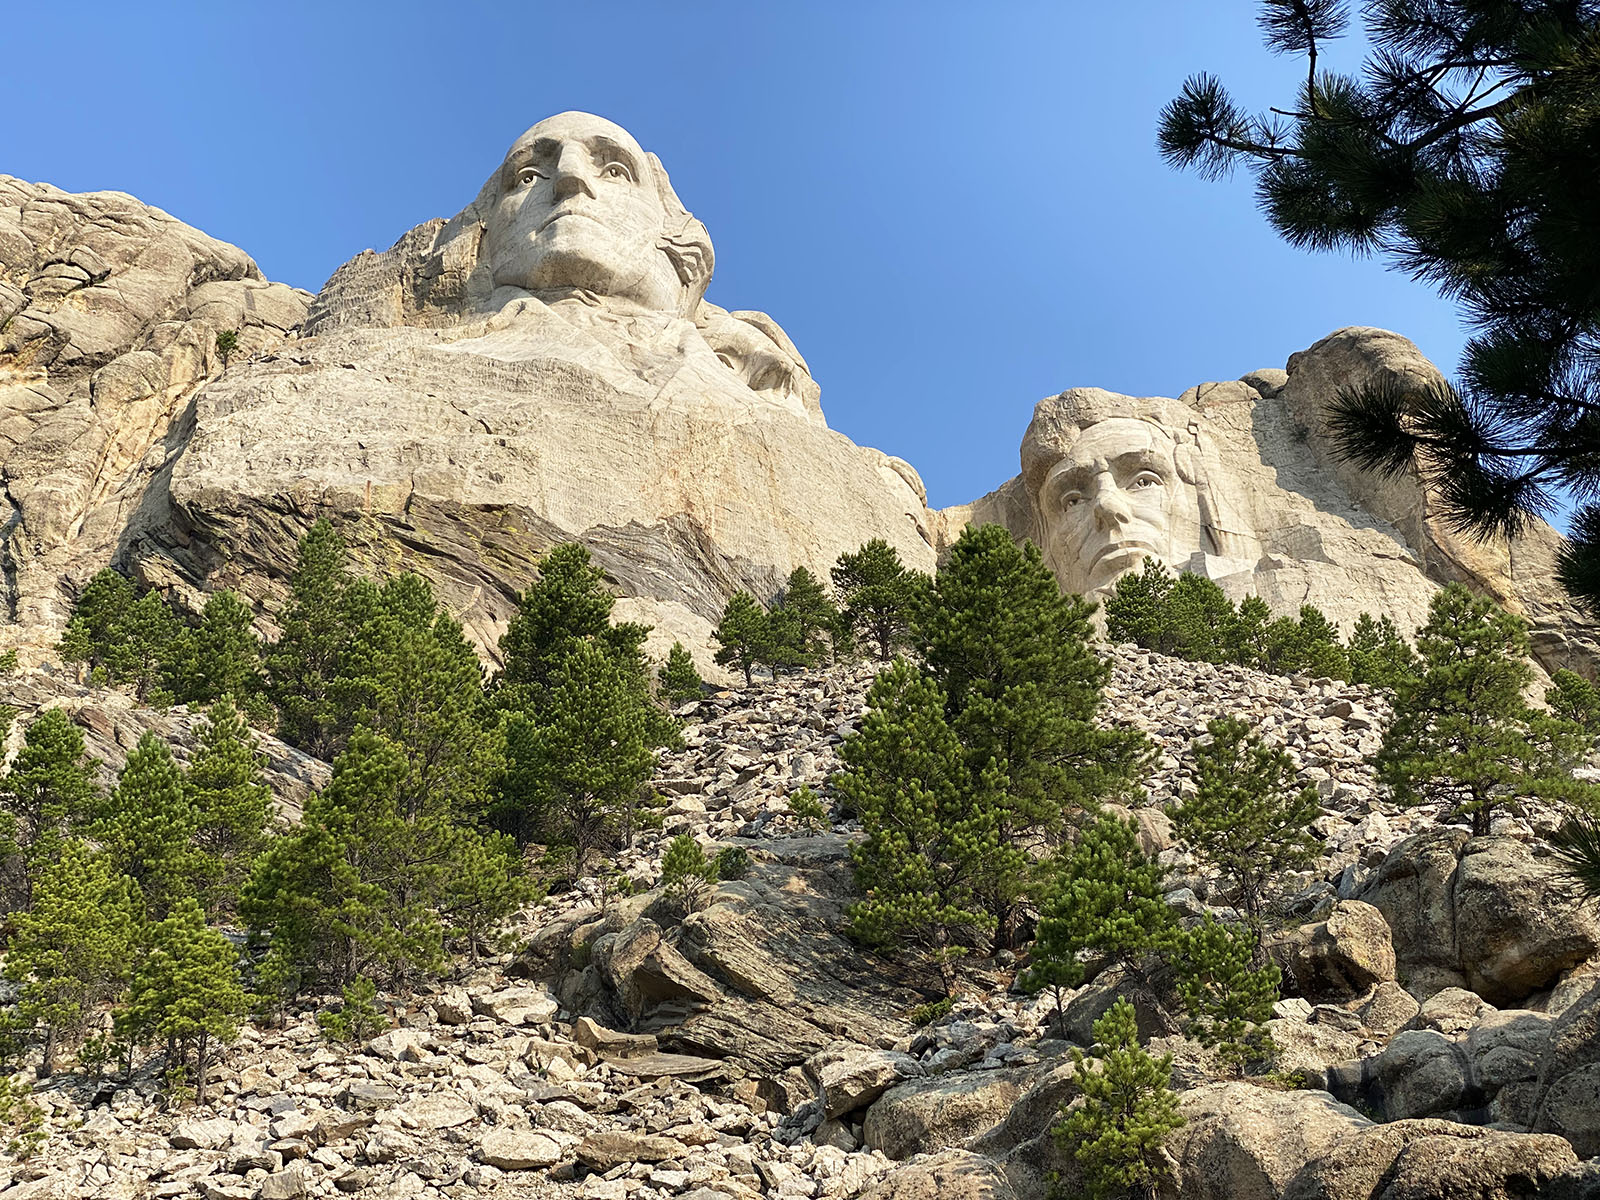 Presidential Trail, Mount Rushmore. Credit: Carolina Valenzuela